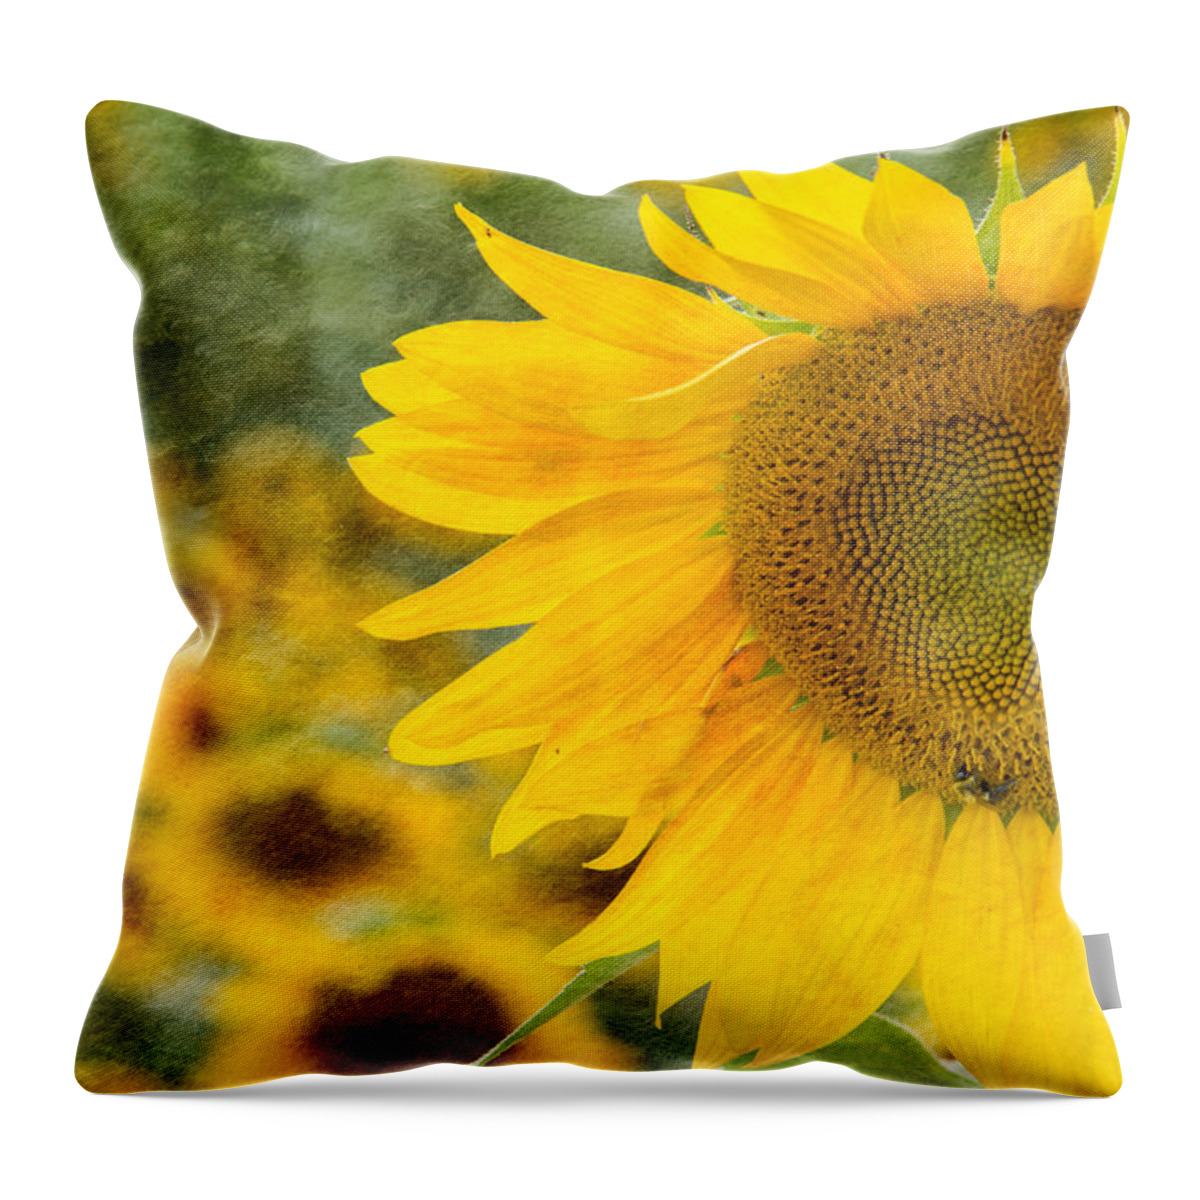 Landscape Throw Pillow featuring the photograph Sunflower #2 by Joye Ardyn Durham